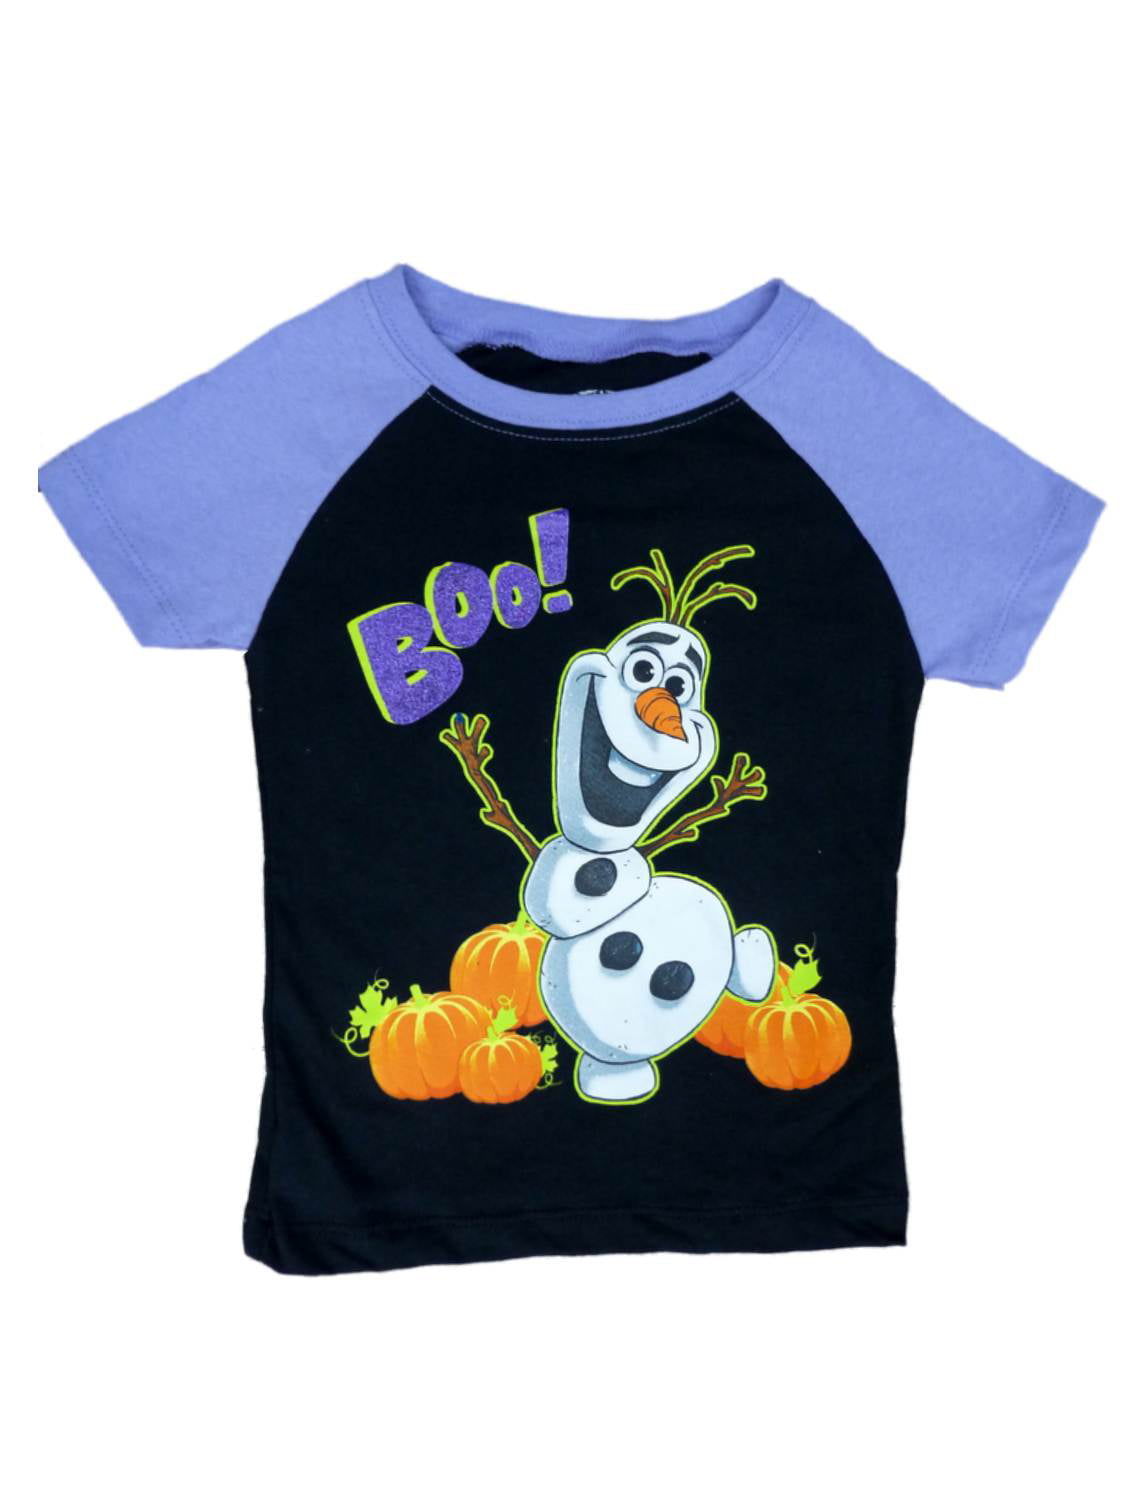 Shirts for Girls Olaf Tshirt Frozen Toddler TShirt Frozen Olaf Shirt Cute Toddler Shirt Disney Toddler Girl Gift